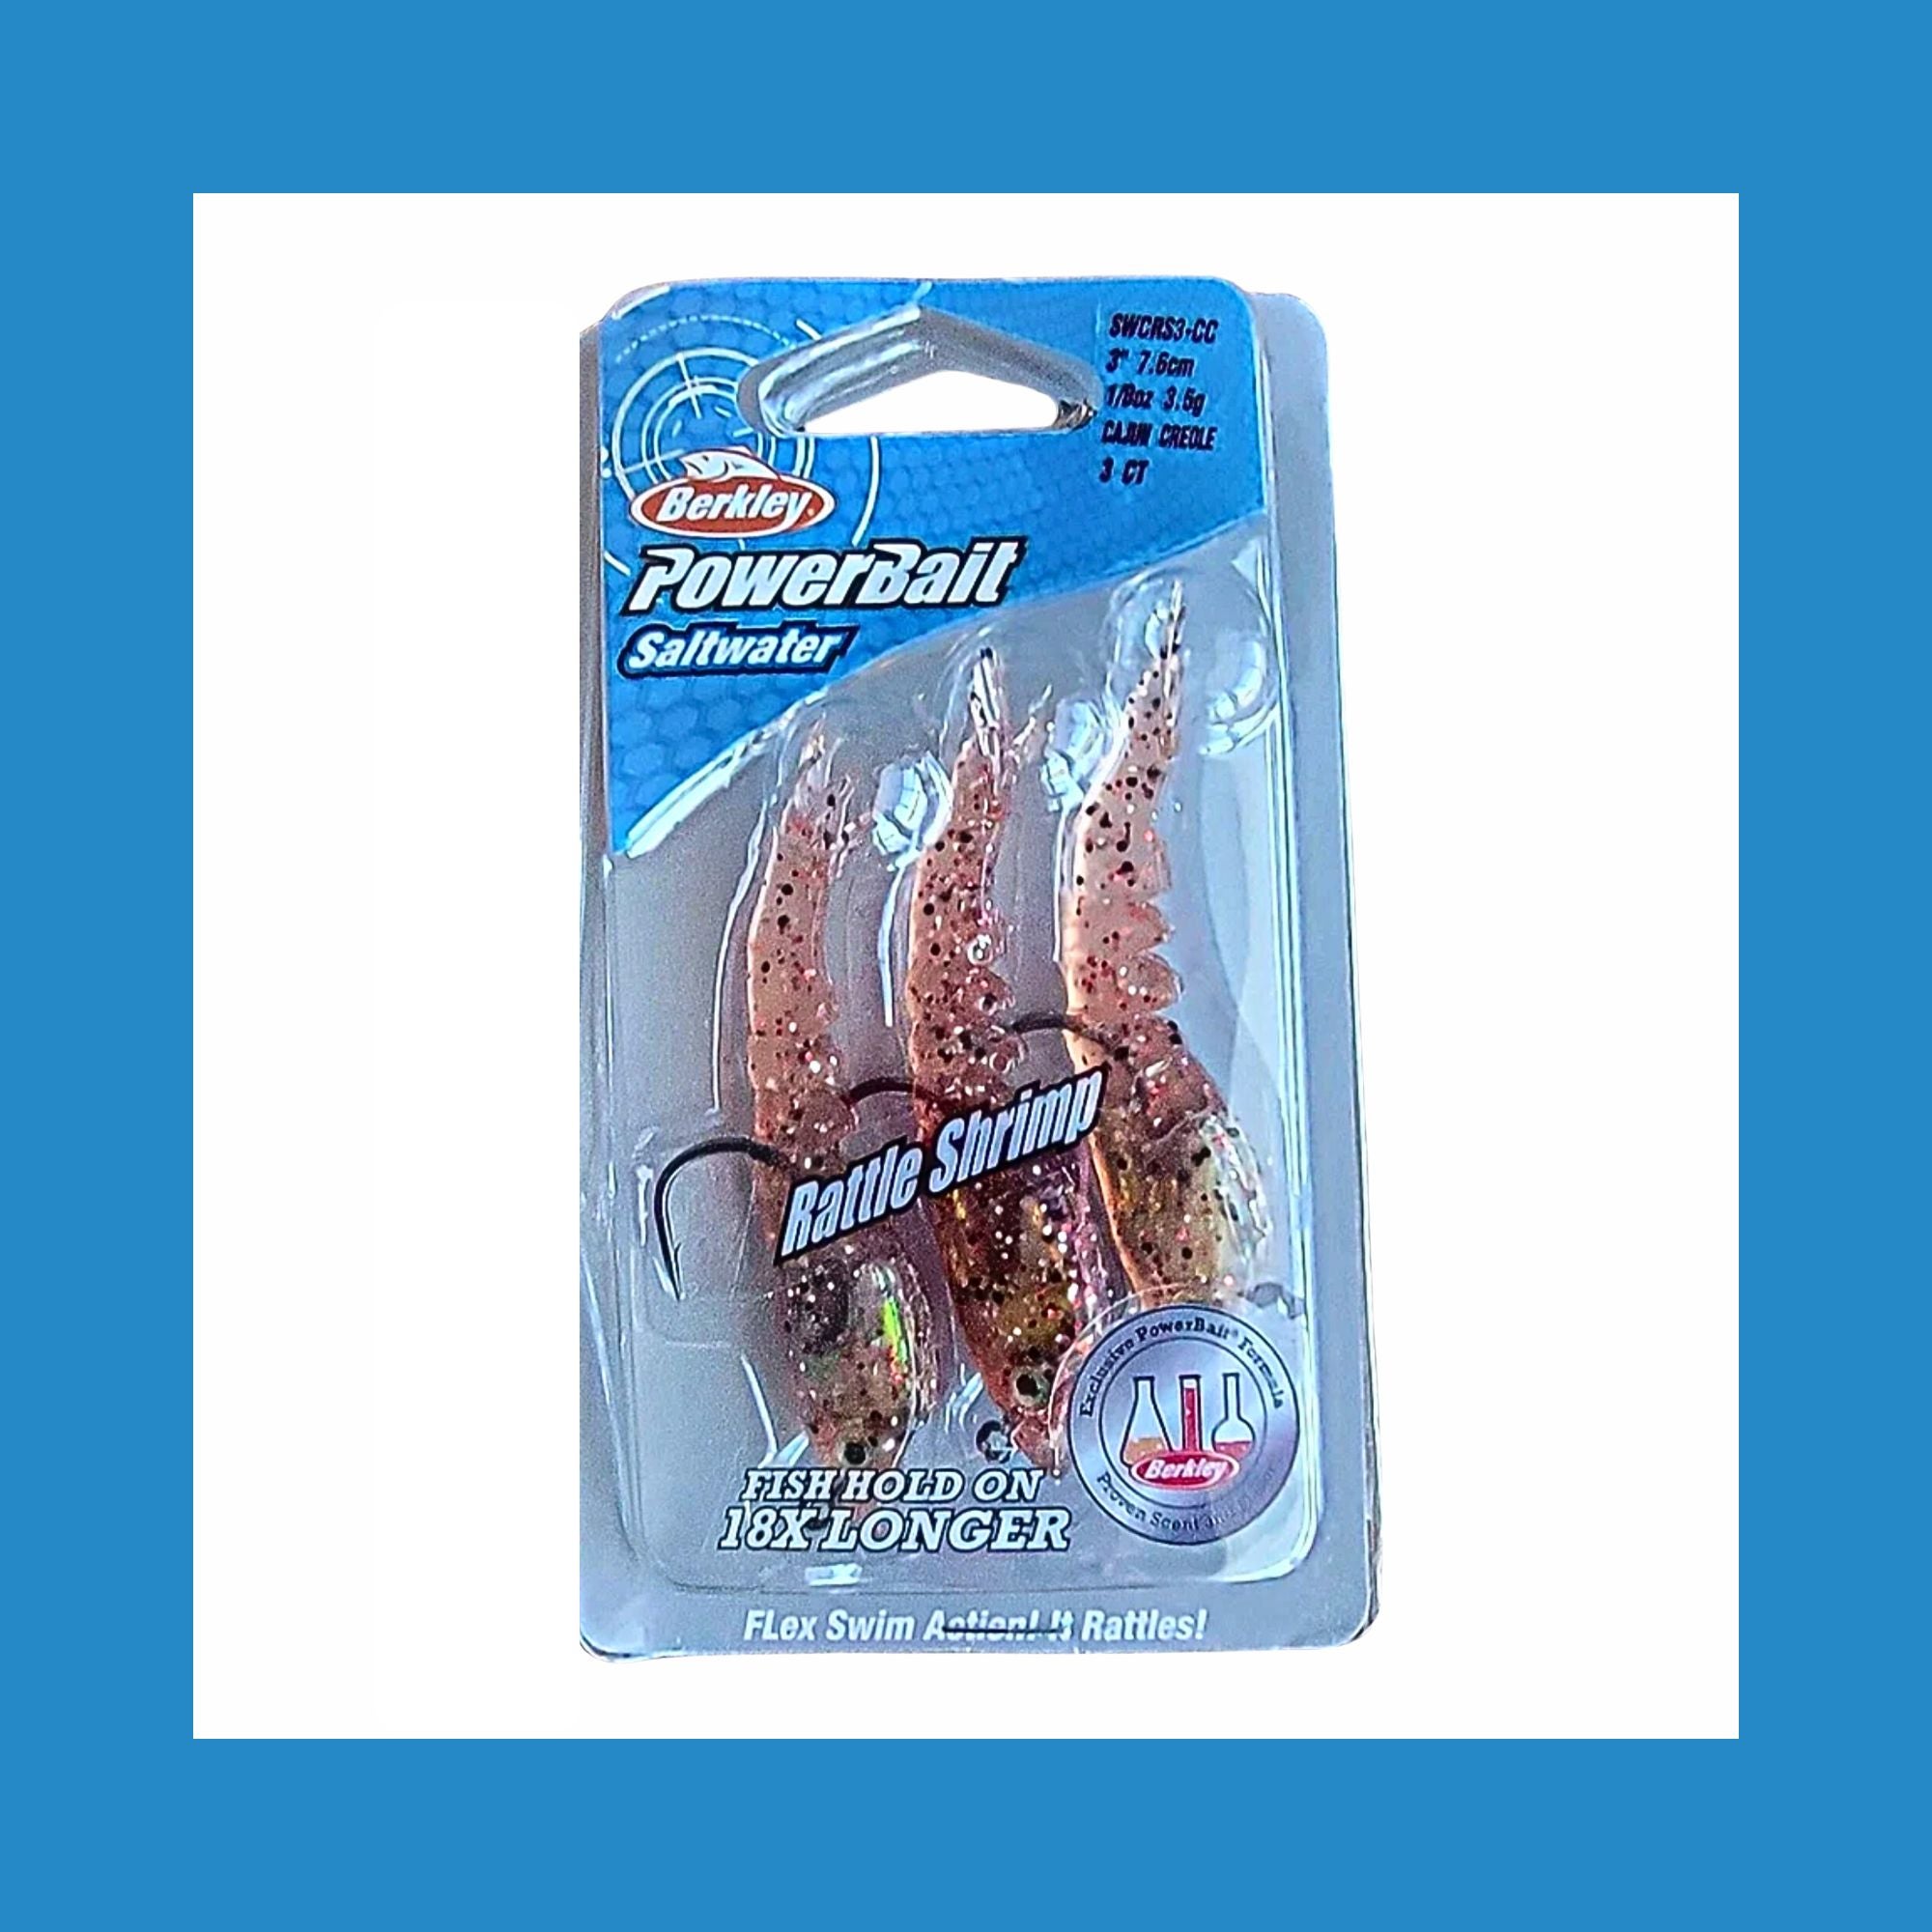 PowerBait Saltwater Rattle Shrimp, Berkley Lures